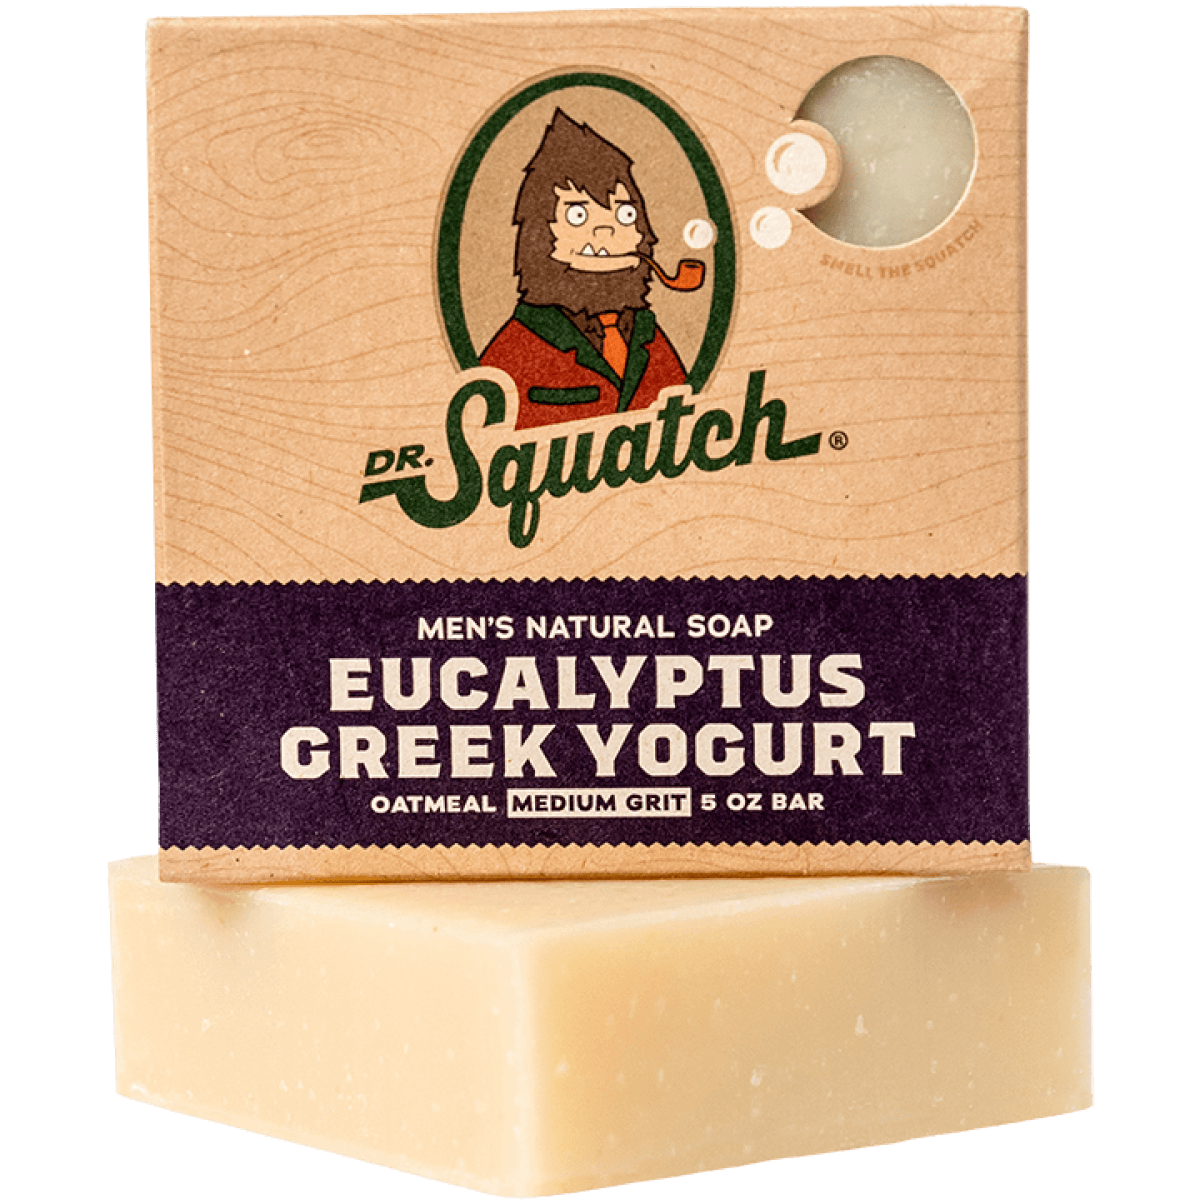 Dr. Squatch Men's Natural Soap Eucalyptus Greek Yogurt 5oz Bar